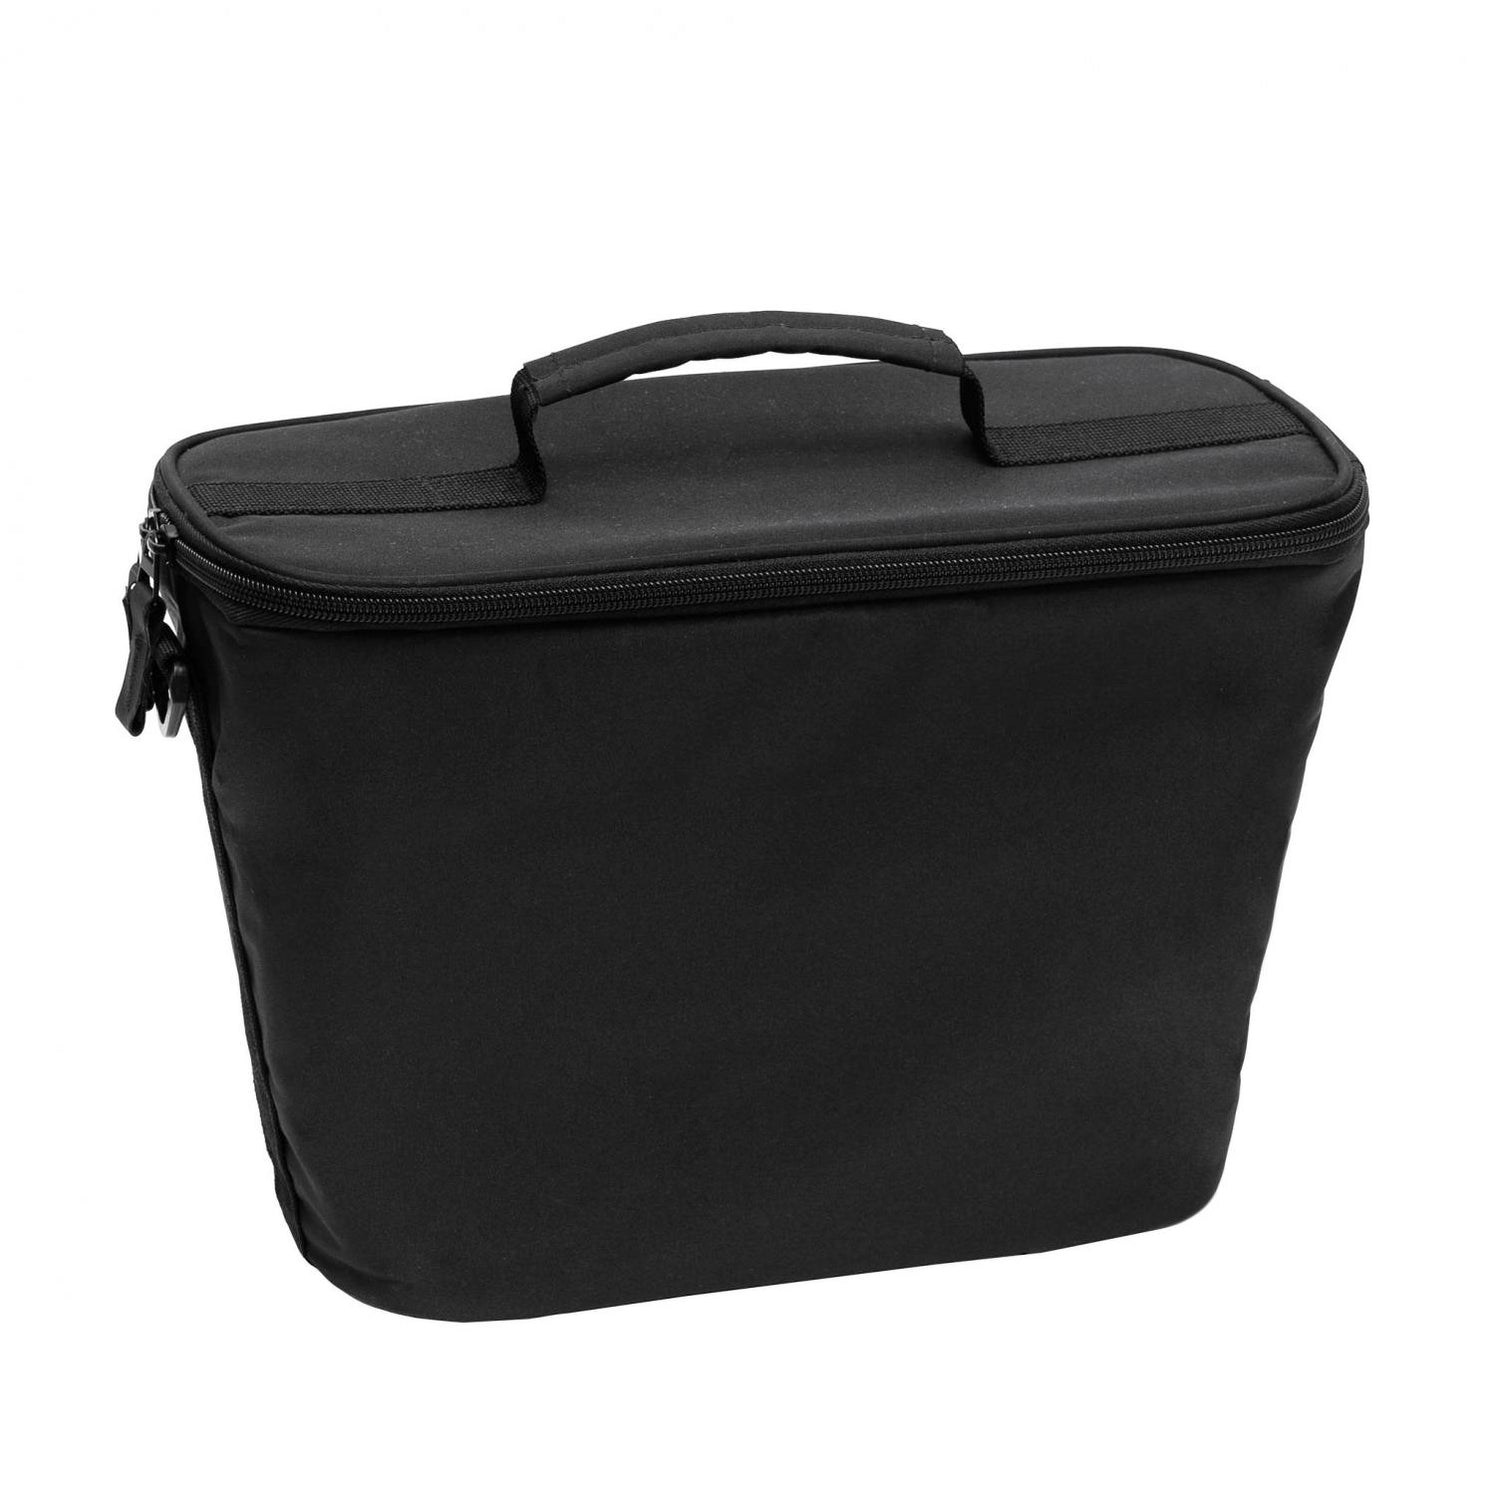 HINZA | Cooler Bag Inserts | Shop NZ Online Here – PAPER PLANE